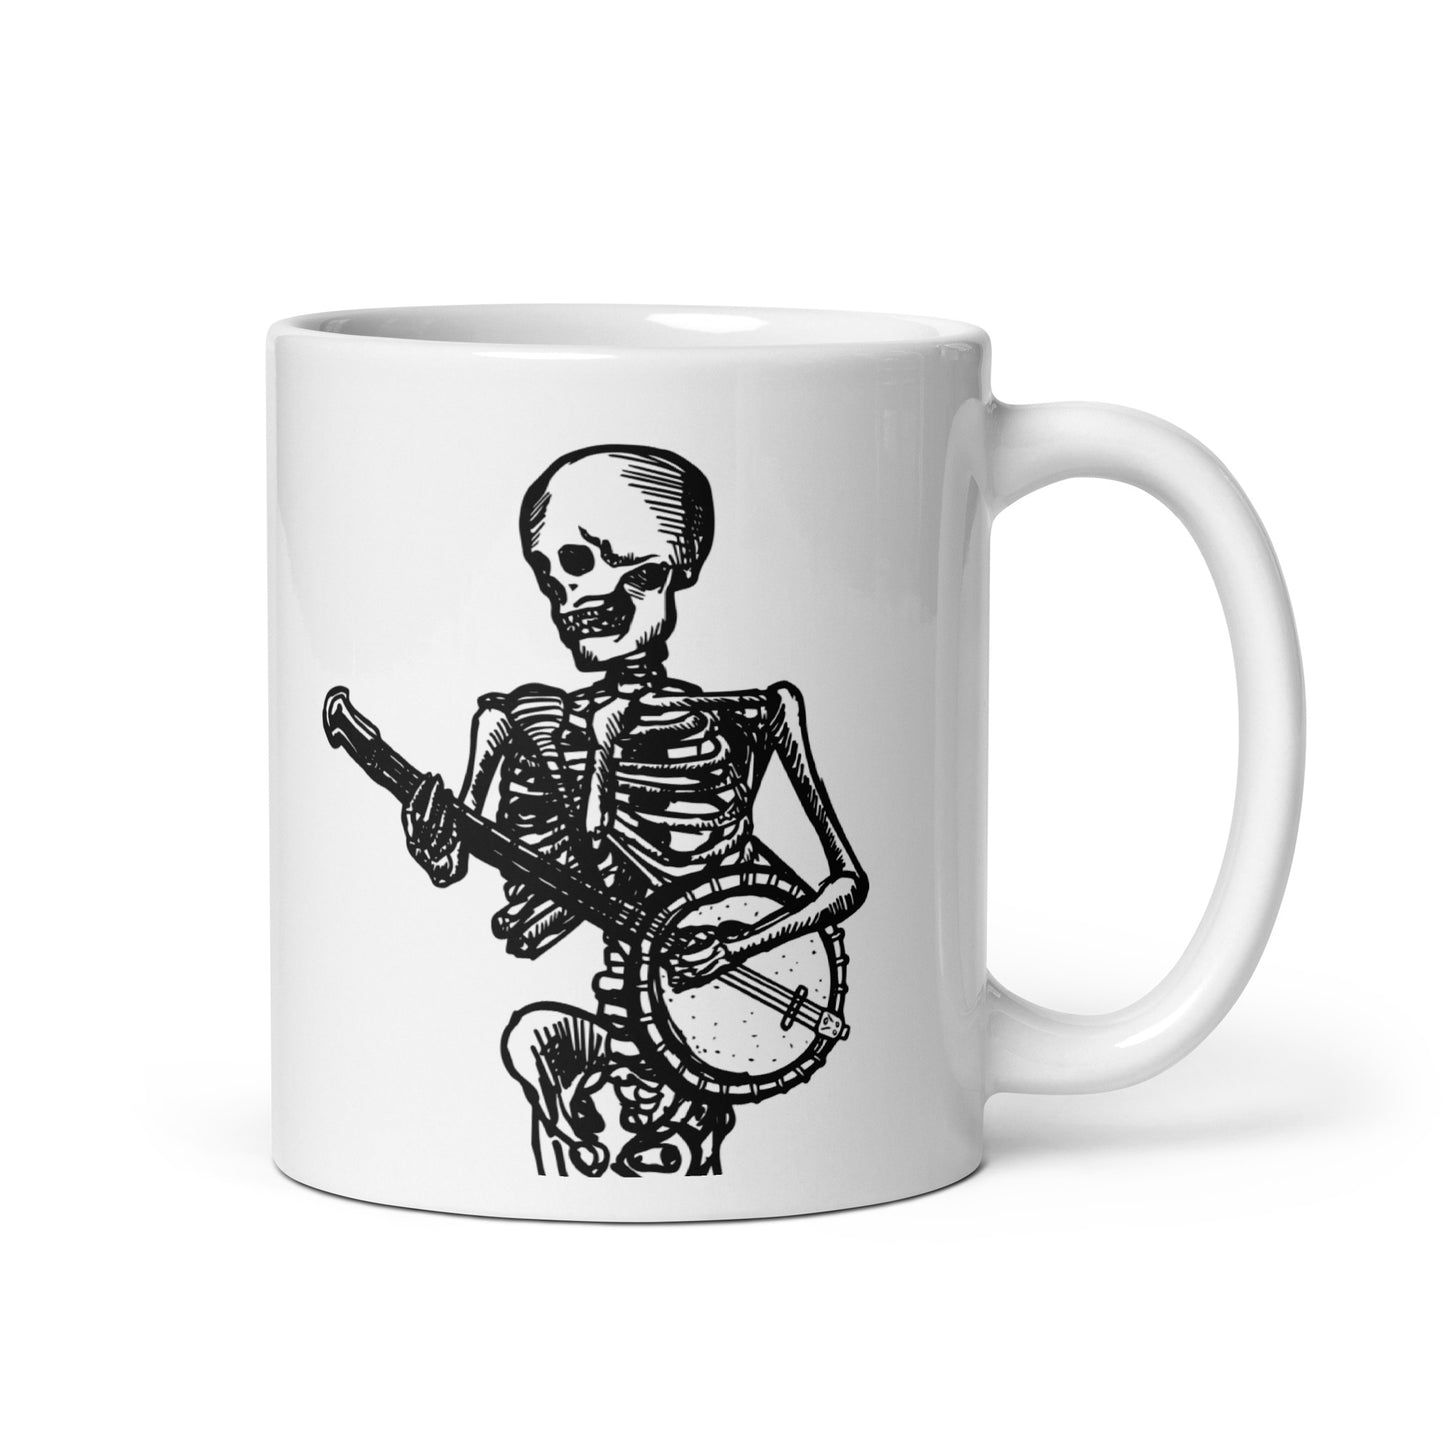 BellavanceInk: 11 Oz Coffee Mug Of Skeleton Playing The Mandolin, Violin/Fiddle, Banjo, or Guitar